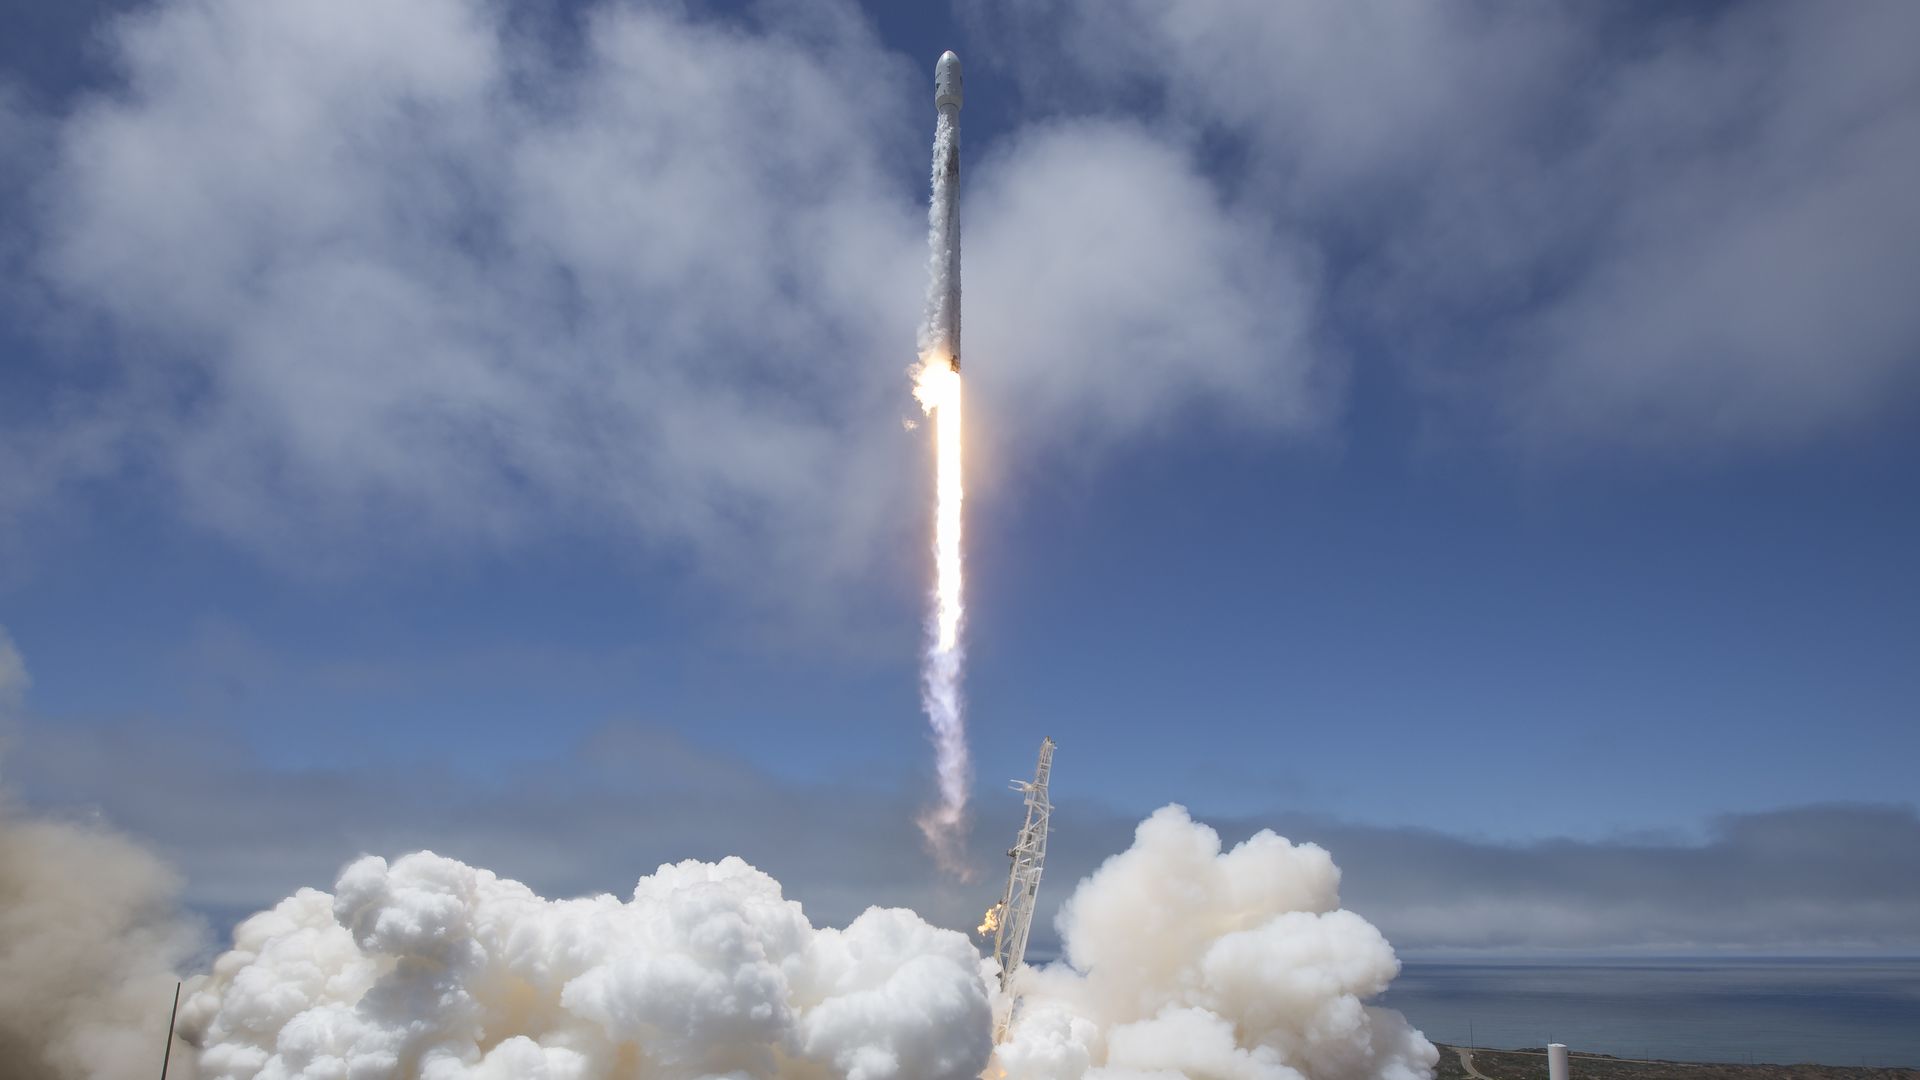 A Falcon 9 rocket taking off